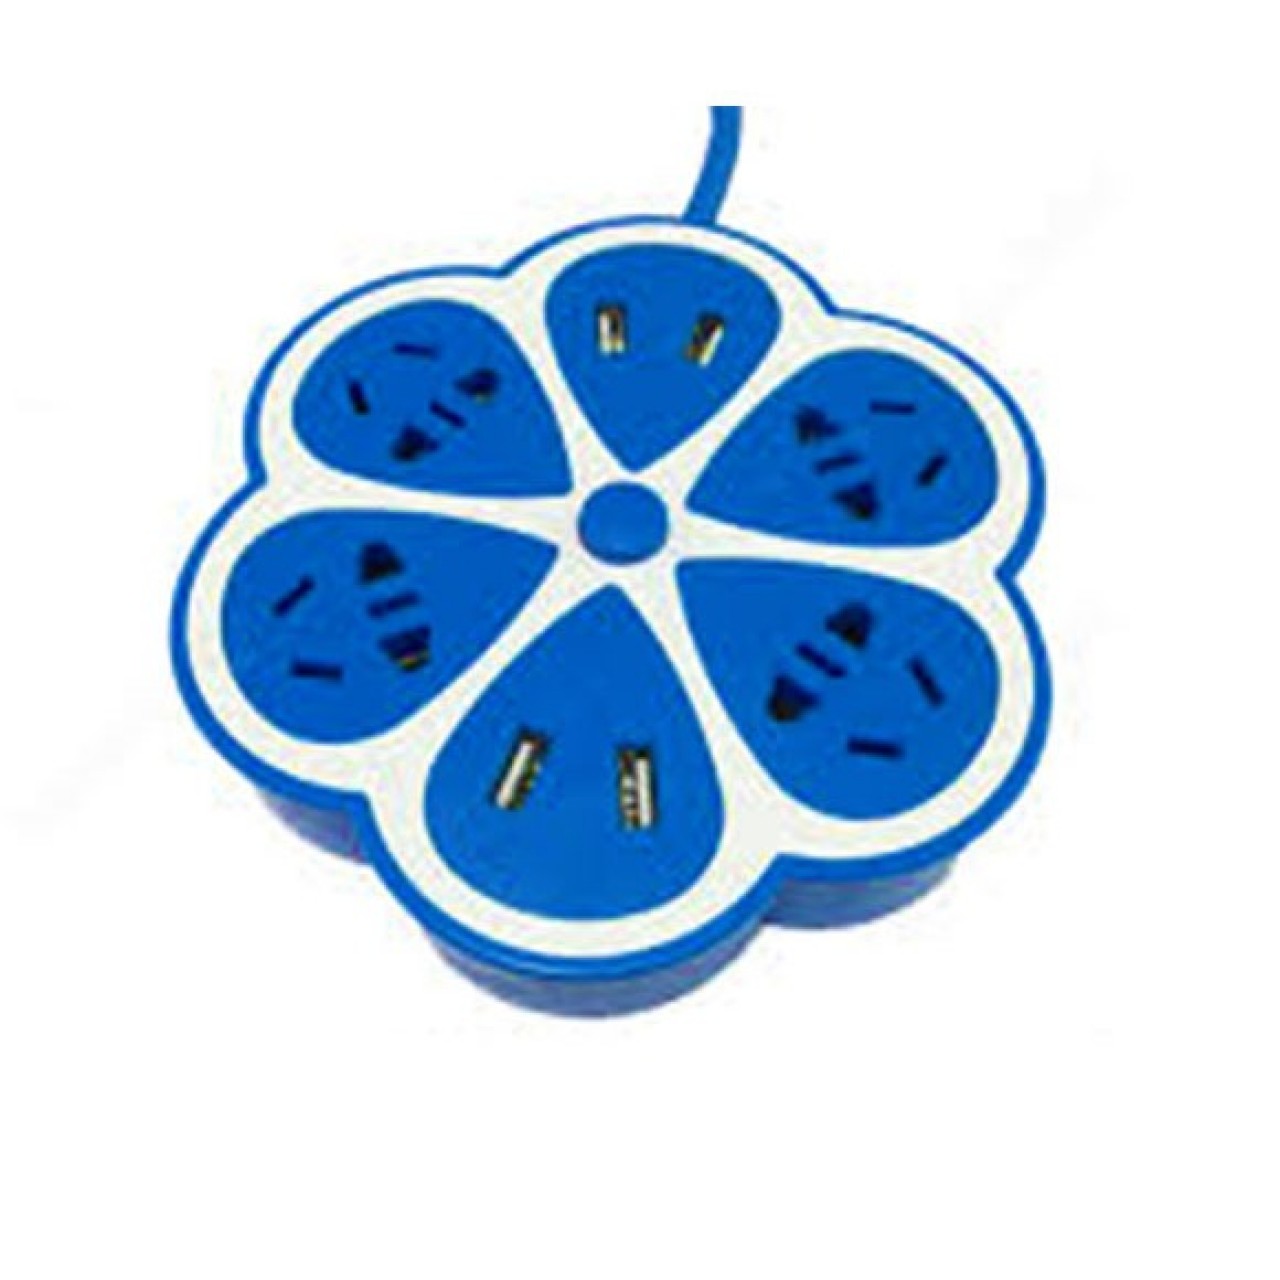 Petal Shape USB & Electric Socket For Home & Office - 4 USB Sockets